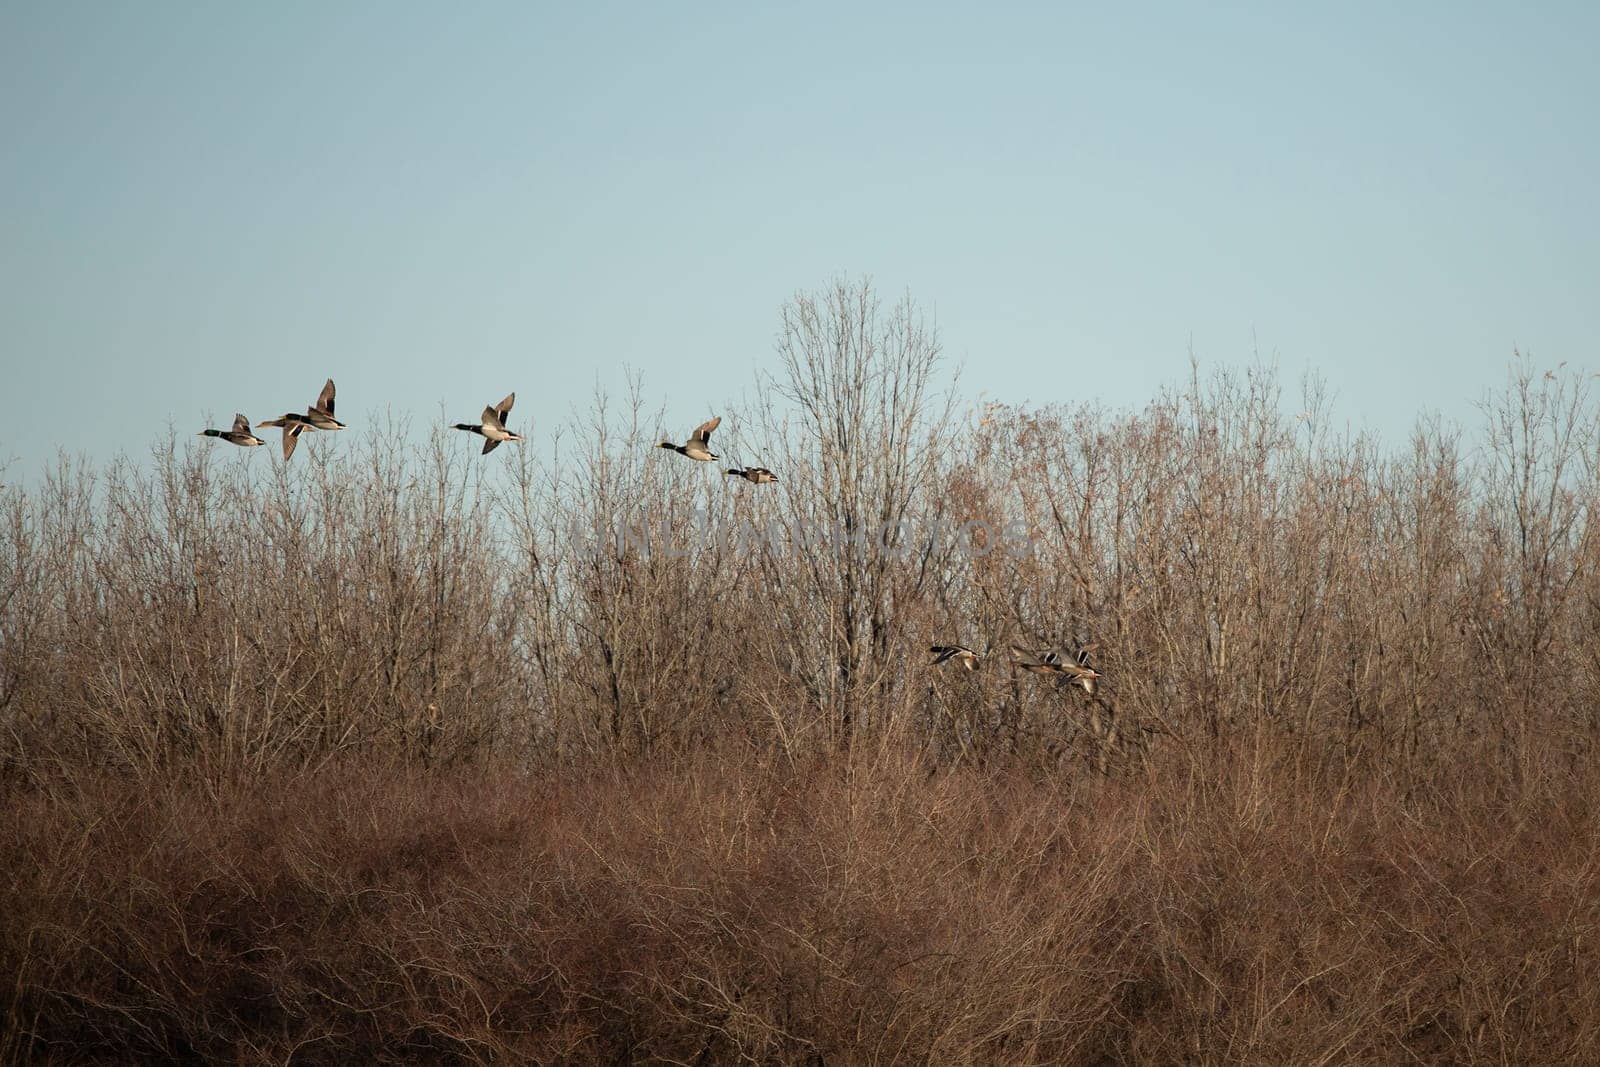 Flock of mallard ducks (Anas platyrhynchos) in flight near bare foliage